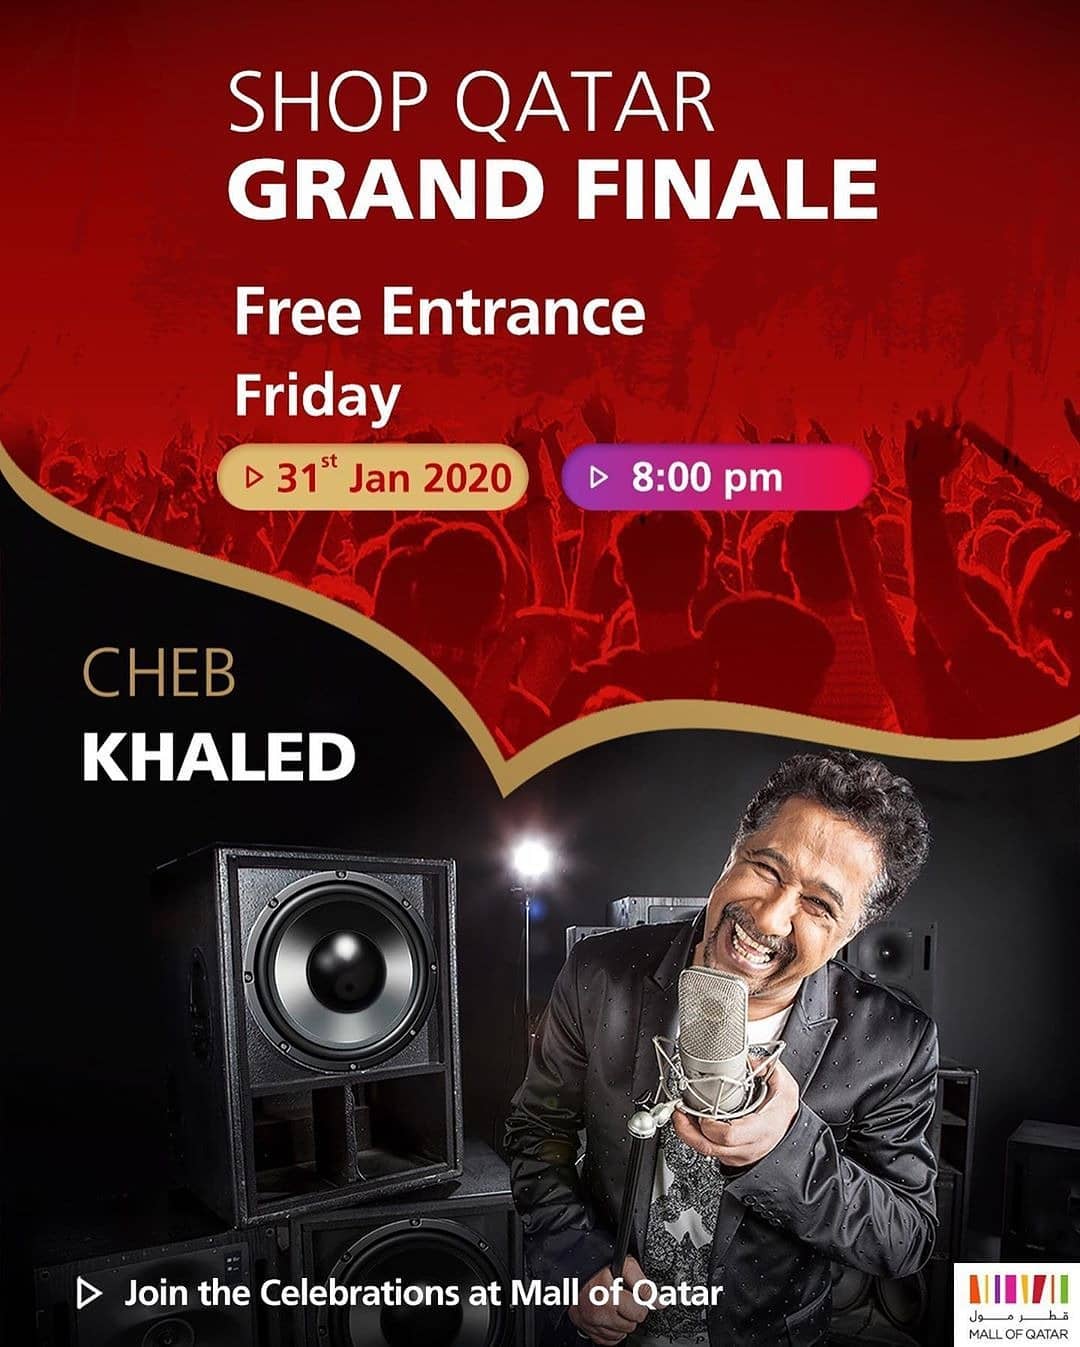 Watch Cheb Khaled live at Mall of Qatar tomorrow!